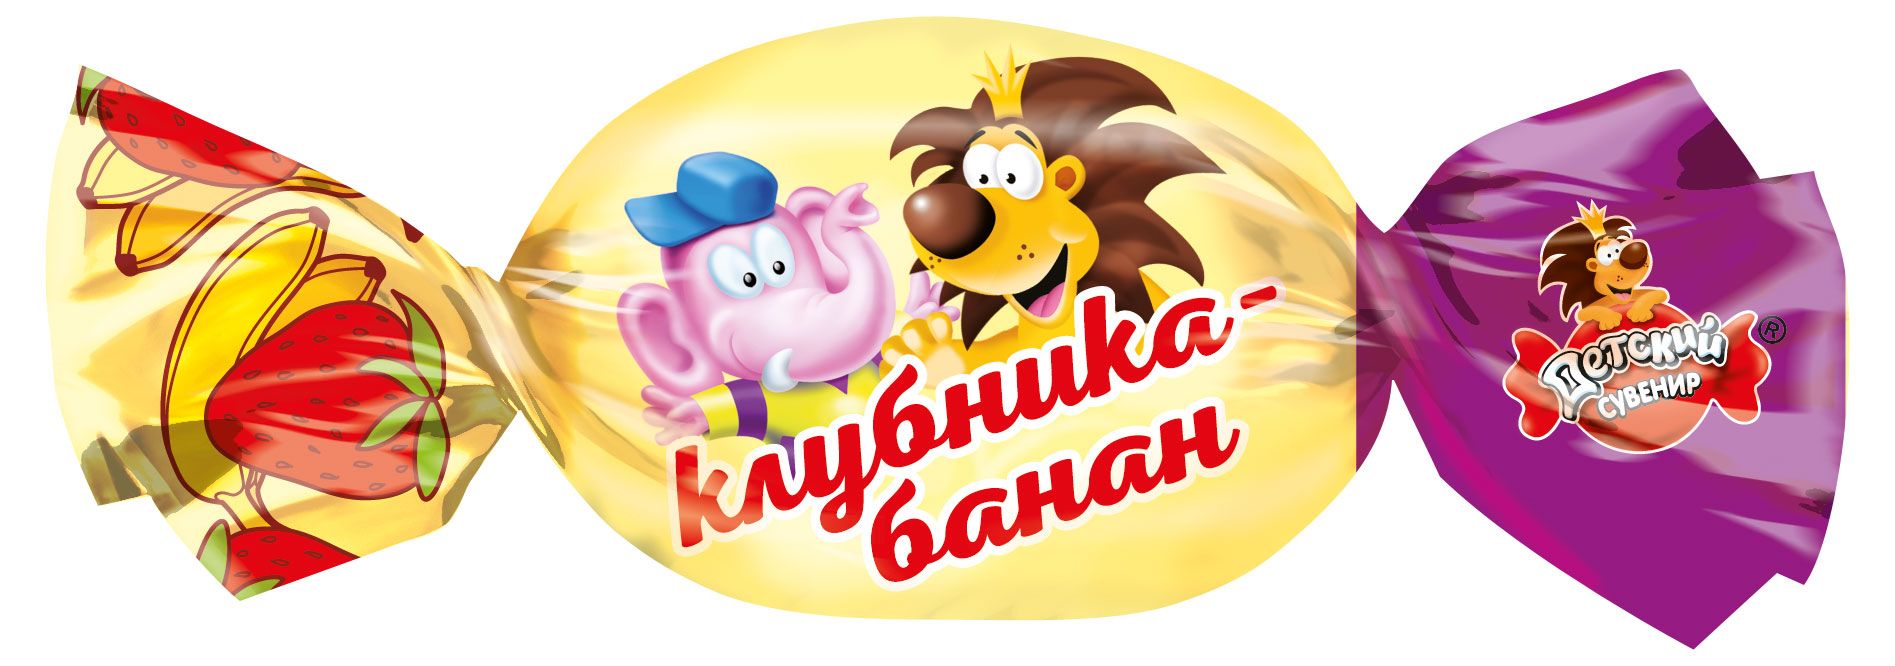 Детский сувенир клубника банан Славянка